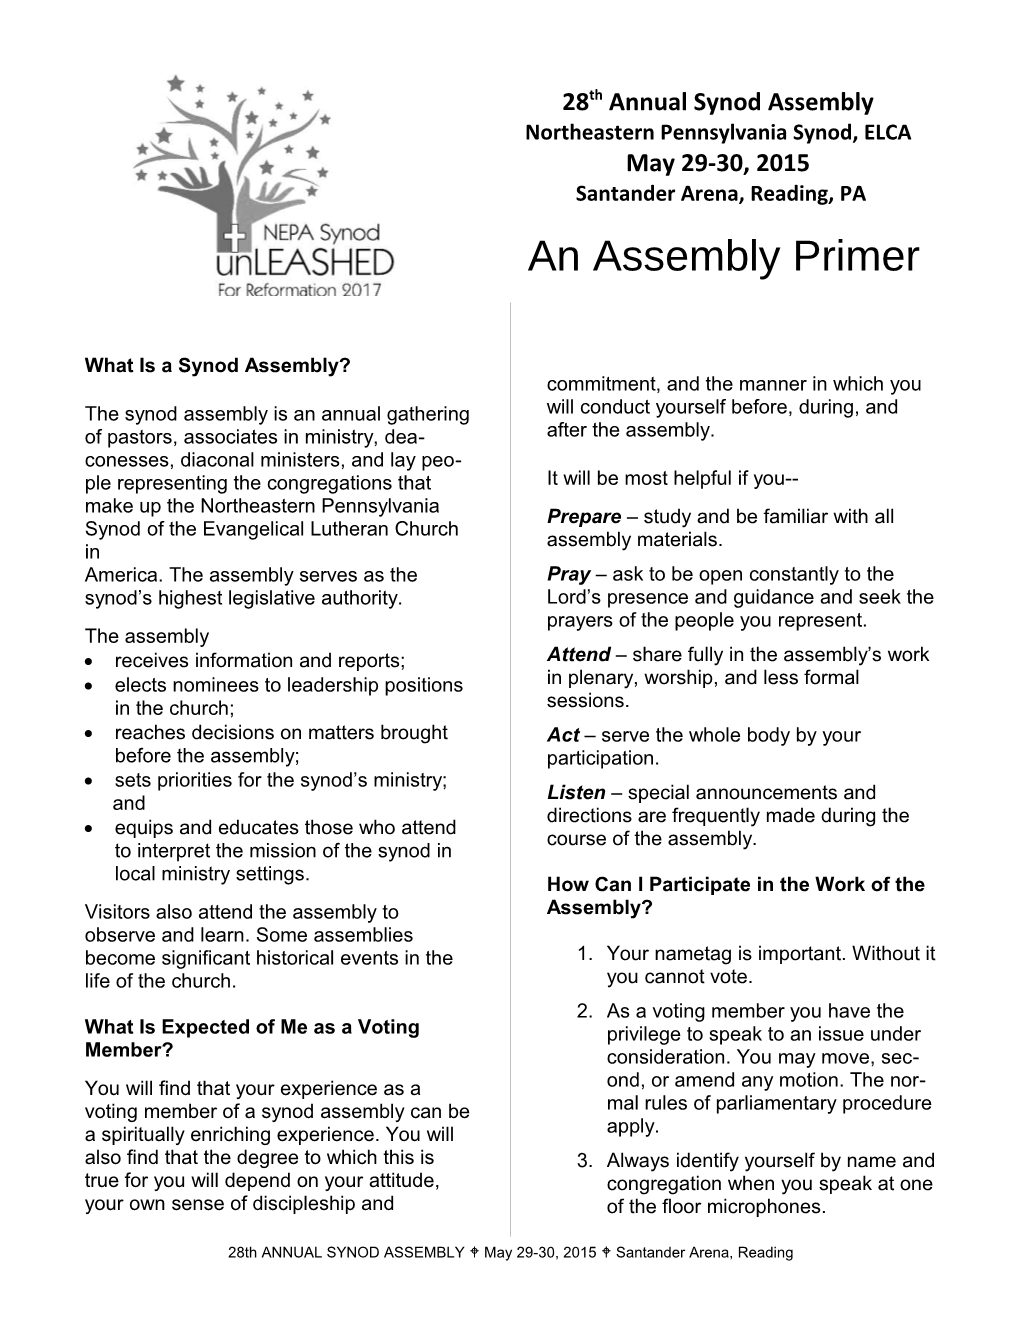 An Assembly Primer